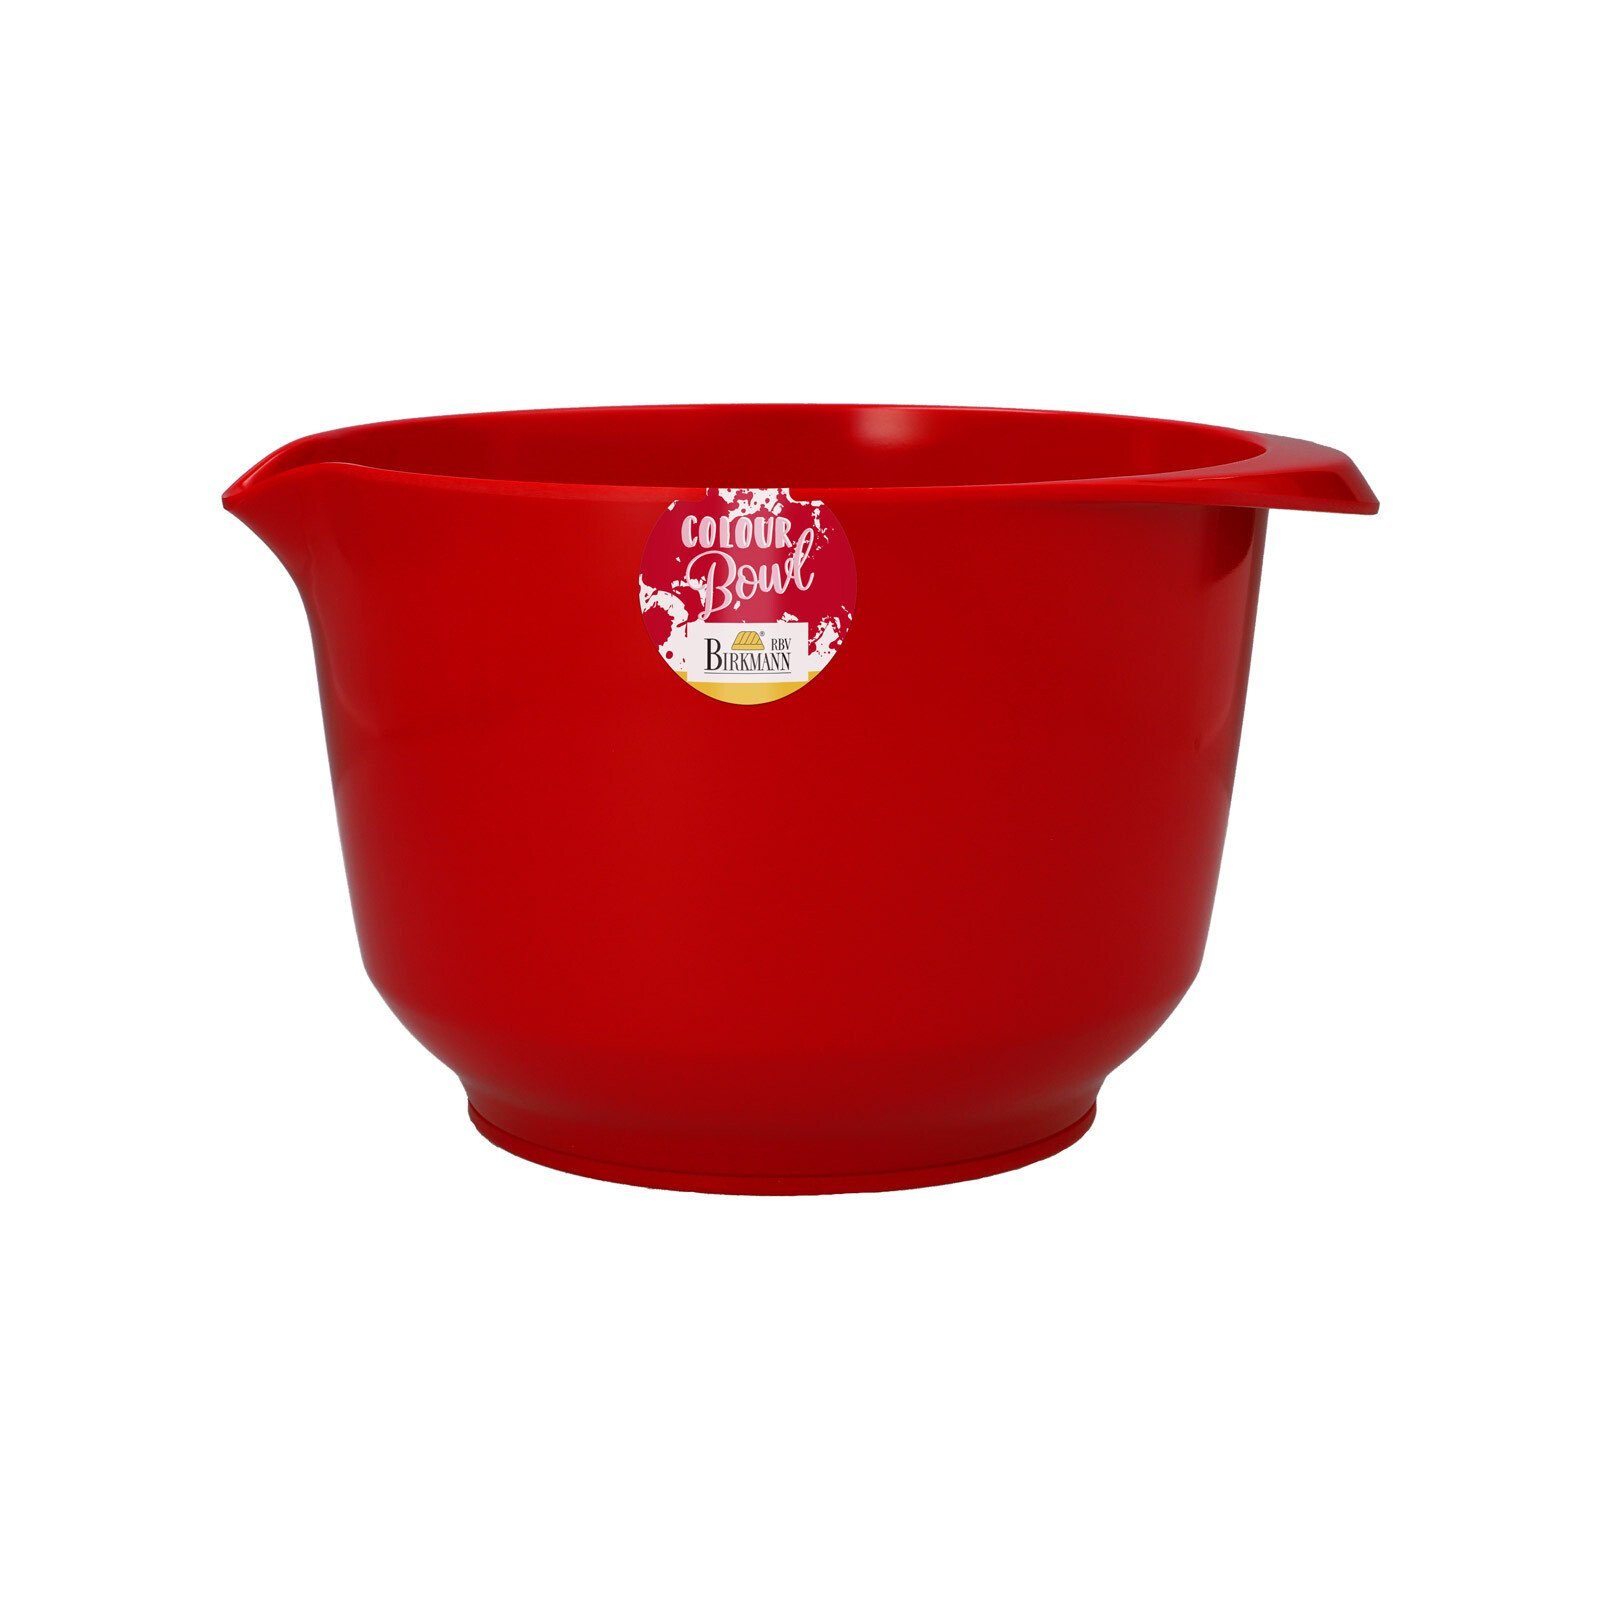 Birkmann Rührschüssel Colour Bowls Rühr- und Servierschüssel 3 Liter, Melamin, (1-tlg) Rot